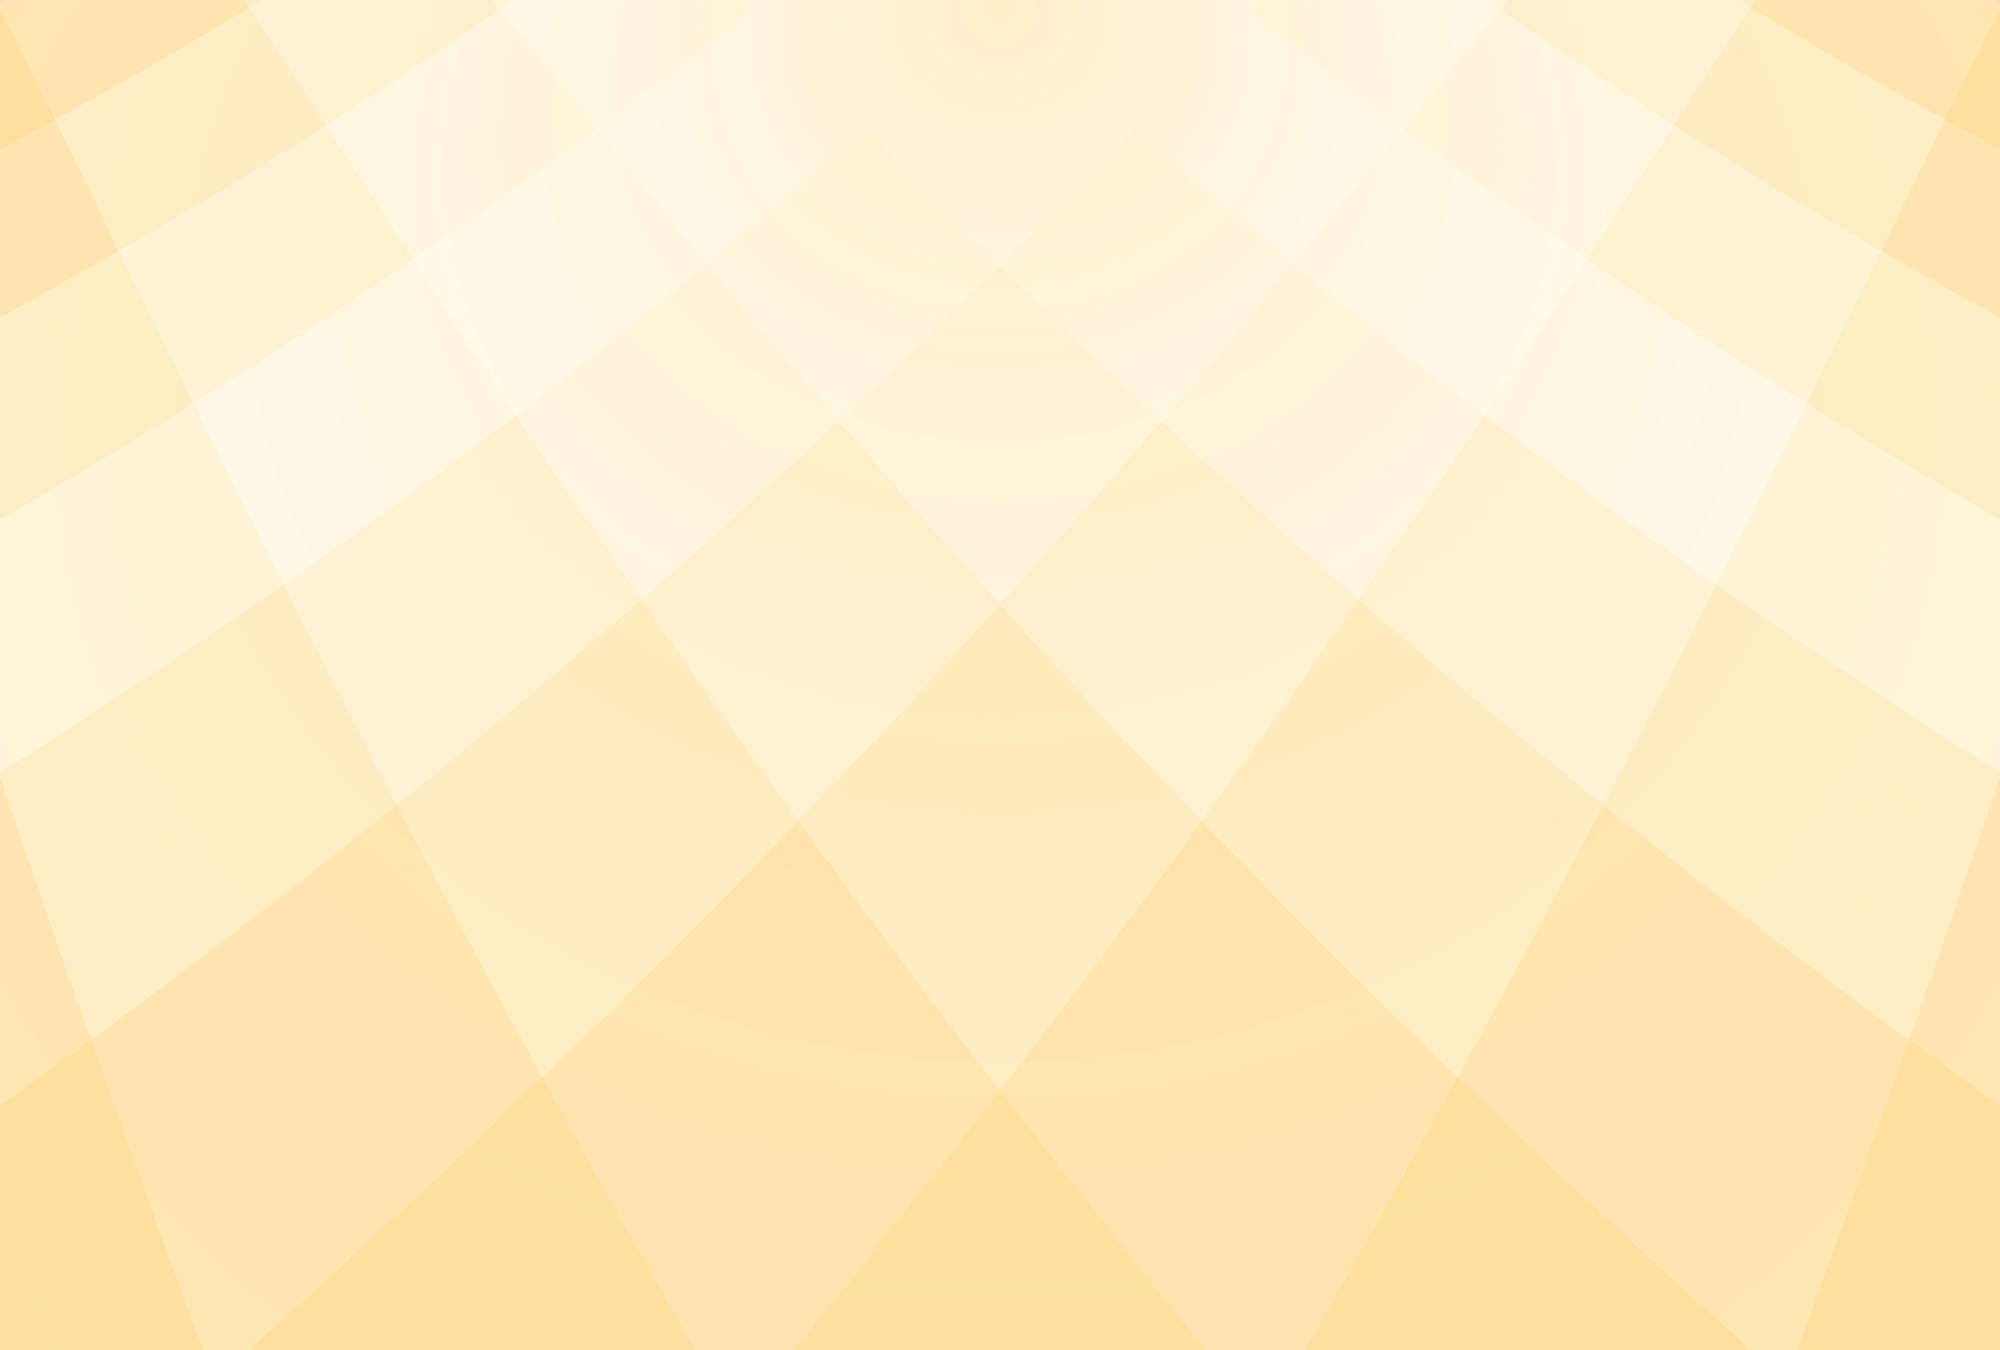             Facetas doradas en un papel pintado amarillo soleado
        